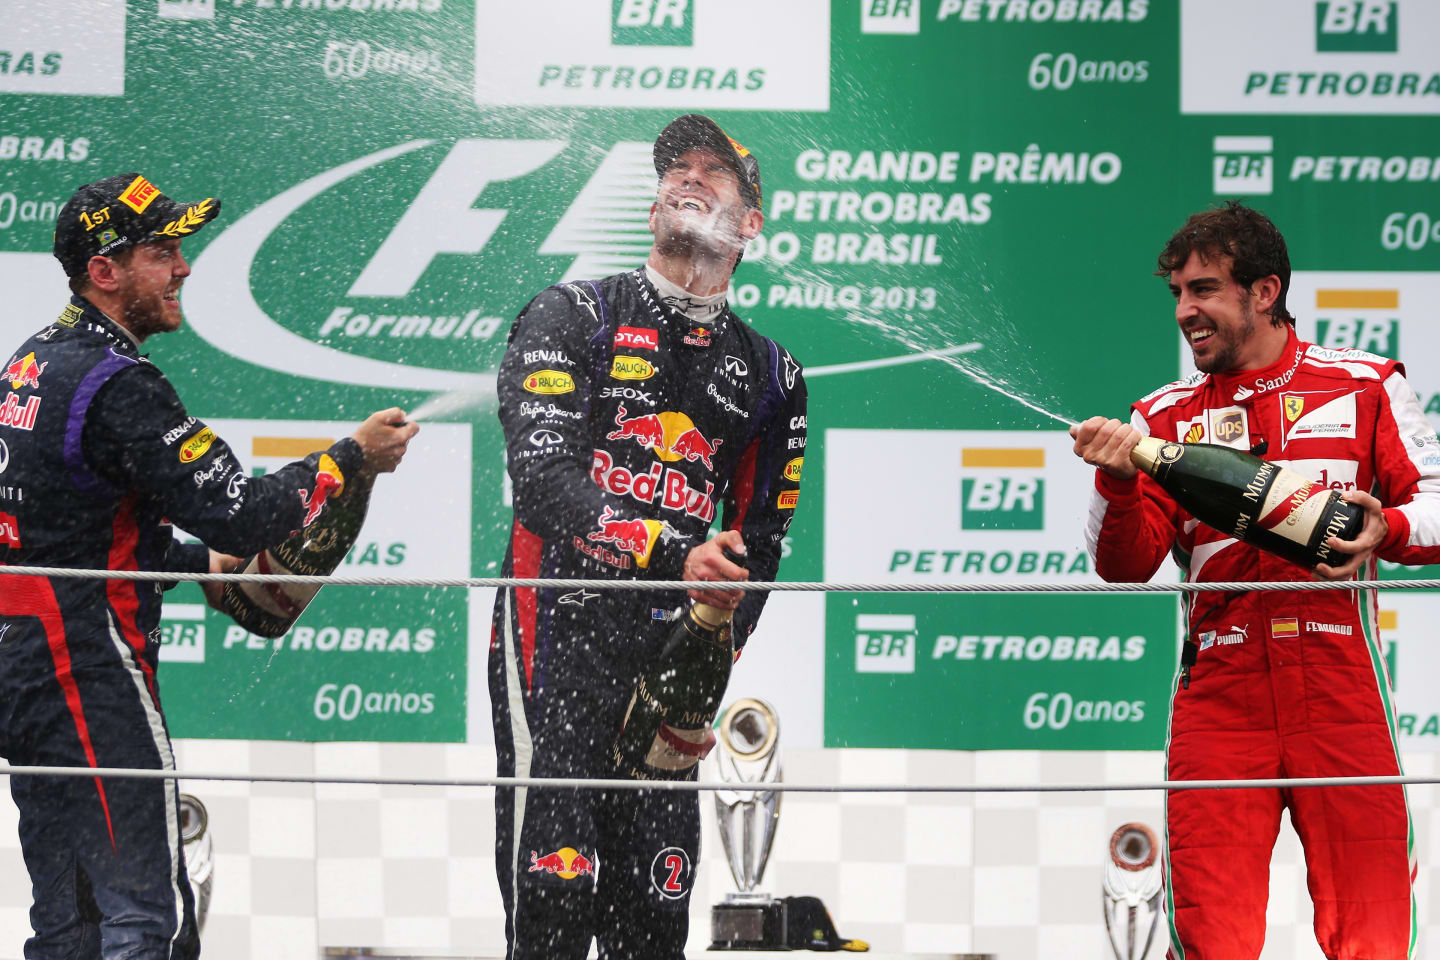 SAO PAULO, BRAZIL - NOVEMBER 24:  Race winner Sebastian Vettel (L) of Germany and Infiniti Red Bull